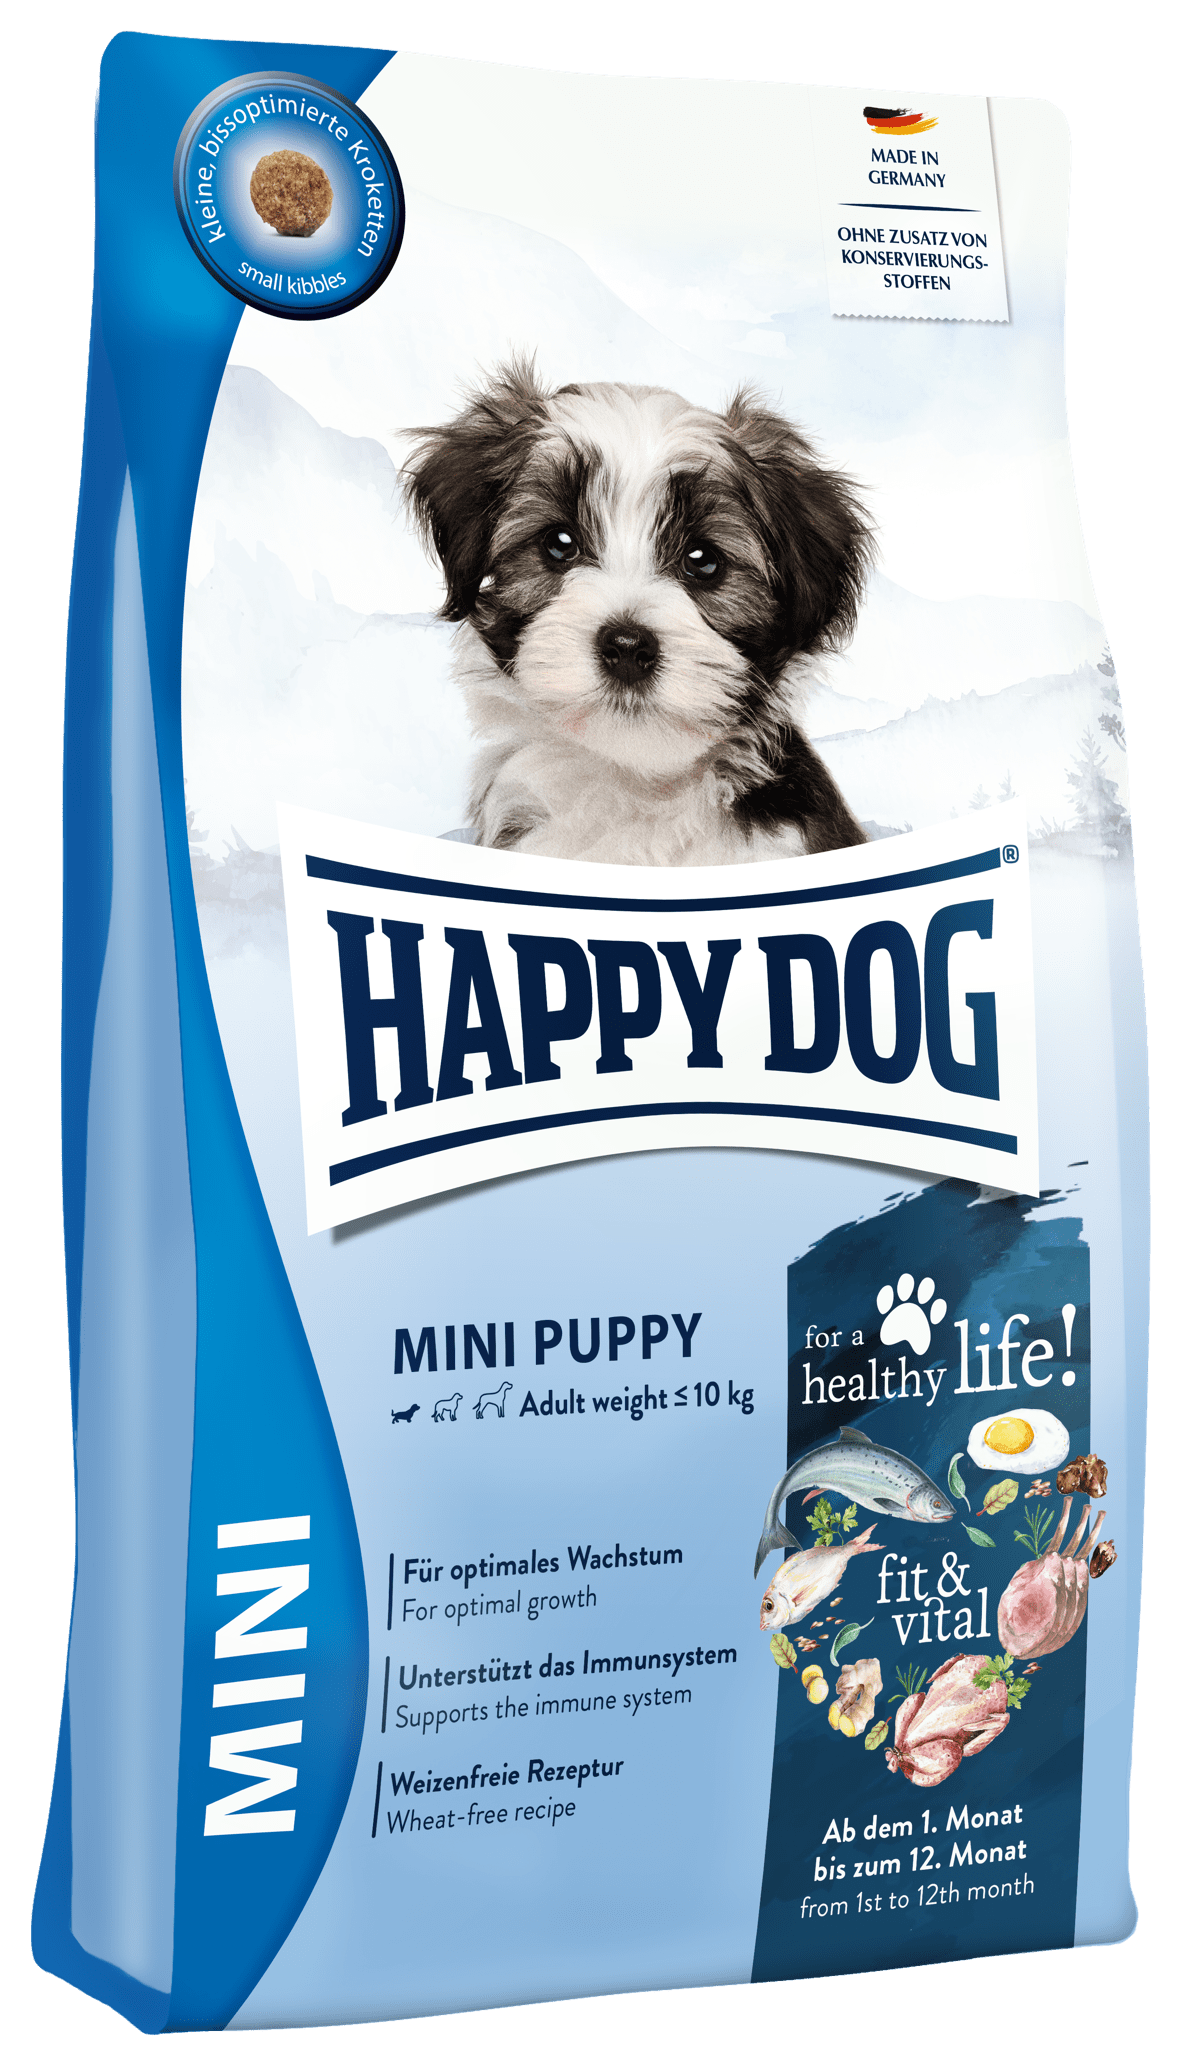 Happy Dog FitVital Mini Puppy Jacket